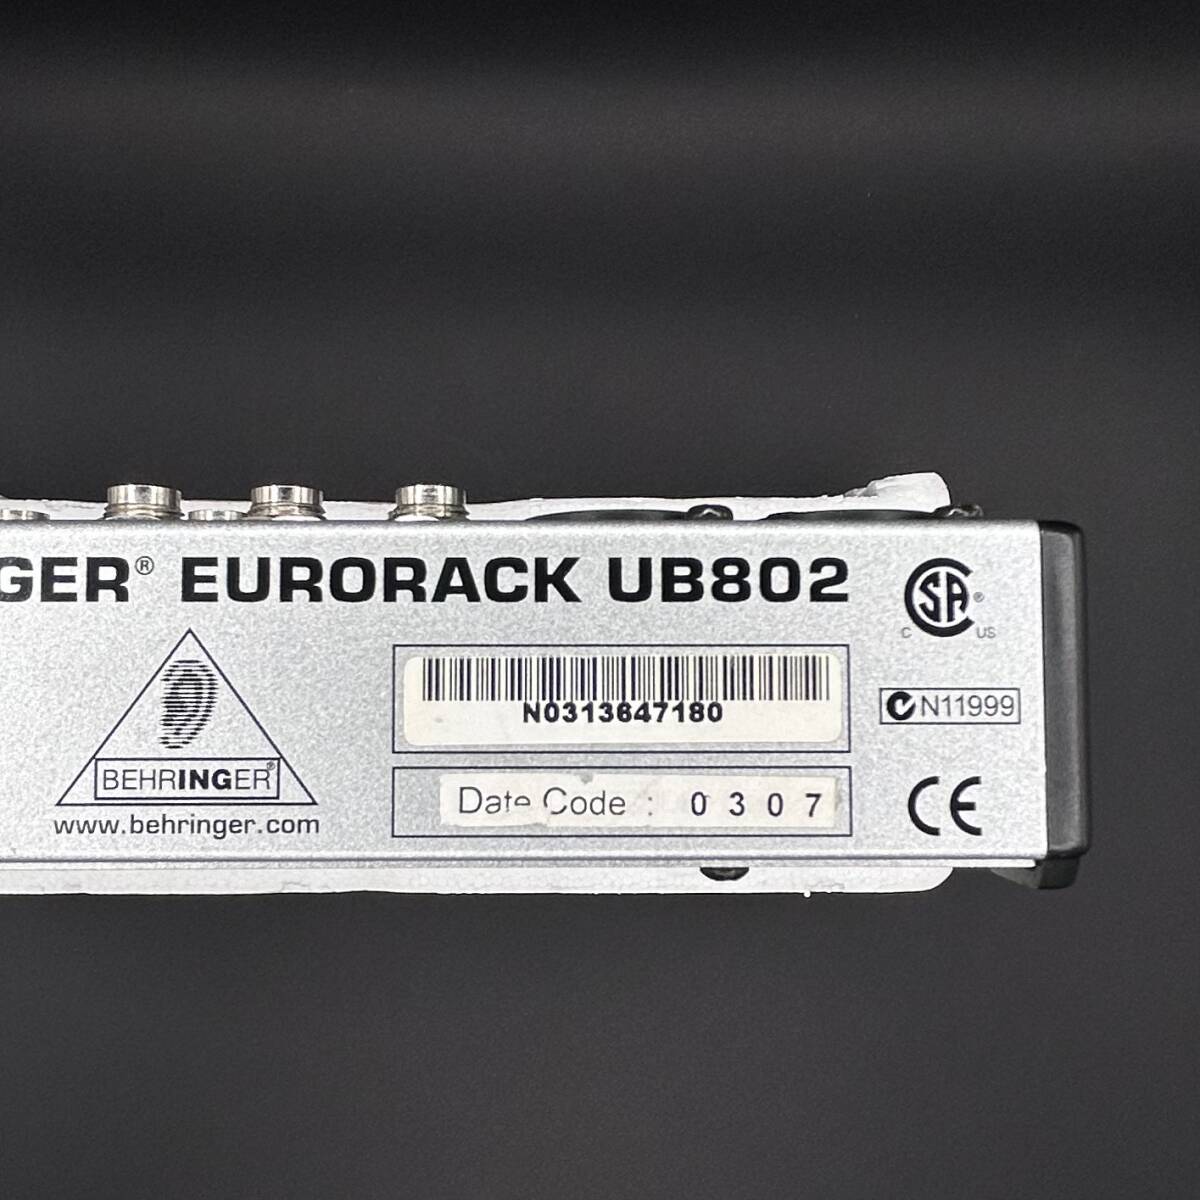 BEHRINGER EURORACK UB802 Behringer analog mixer power supply cable have electrification verification settled 